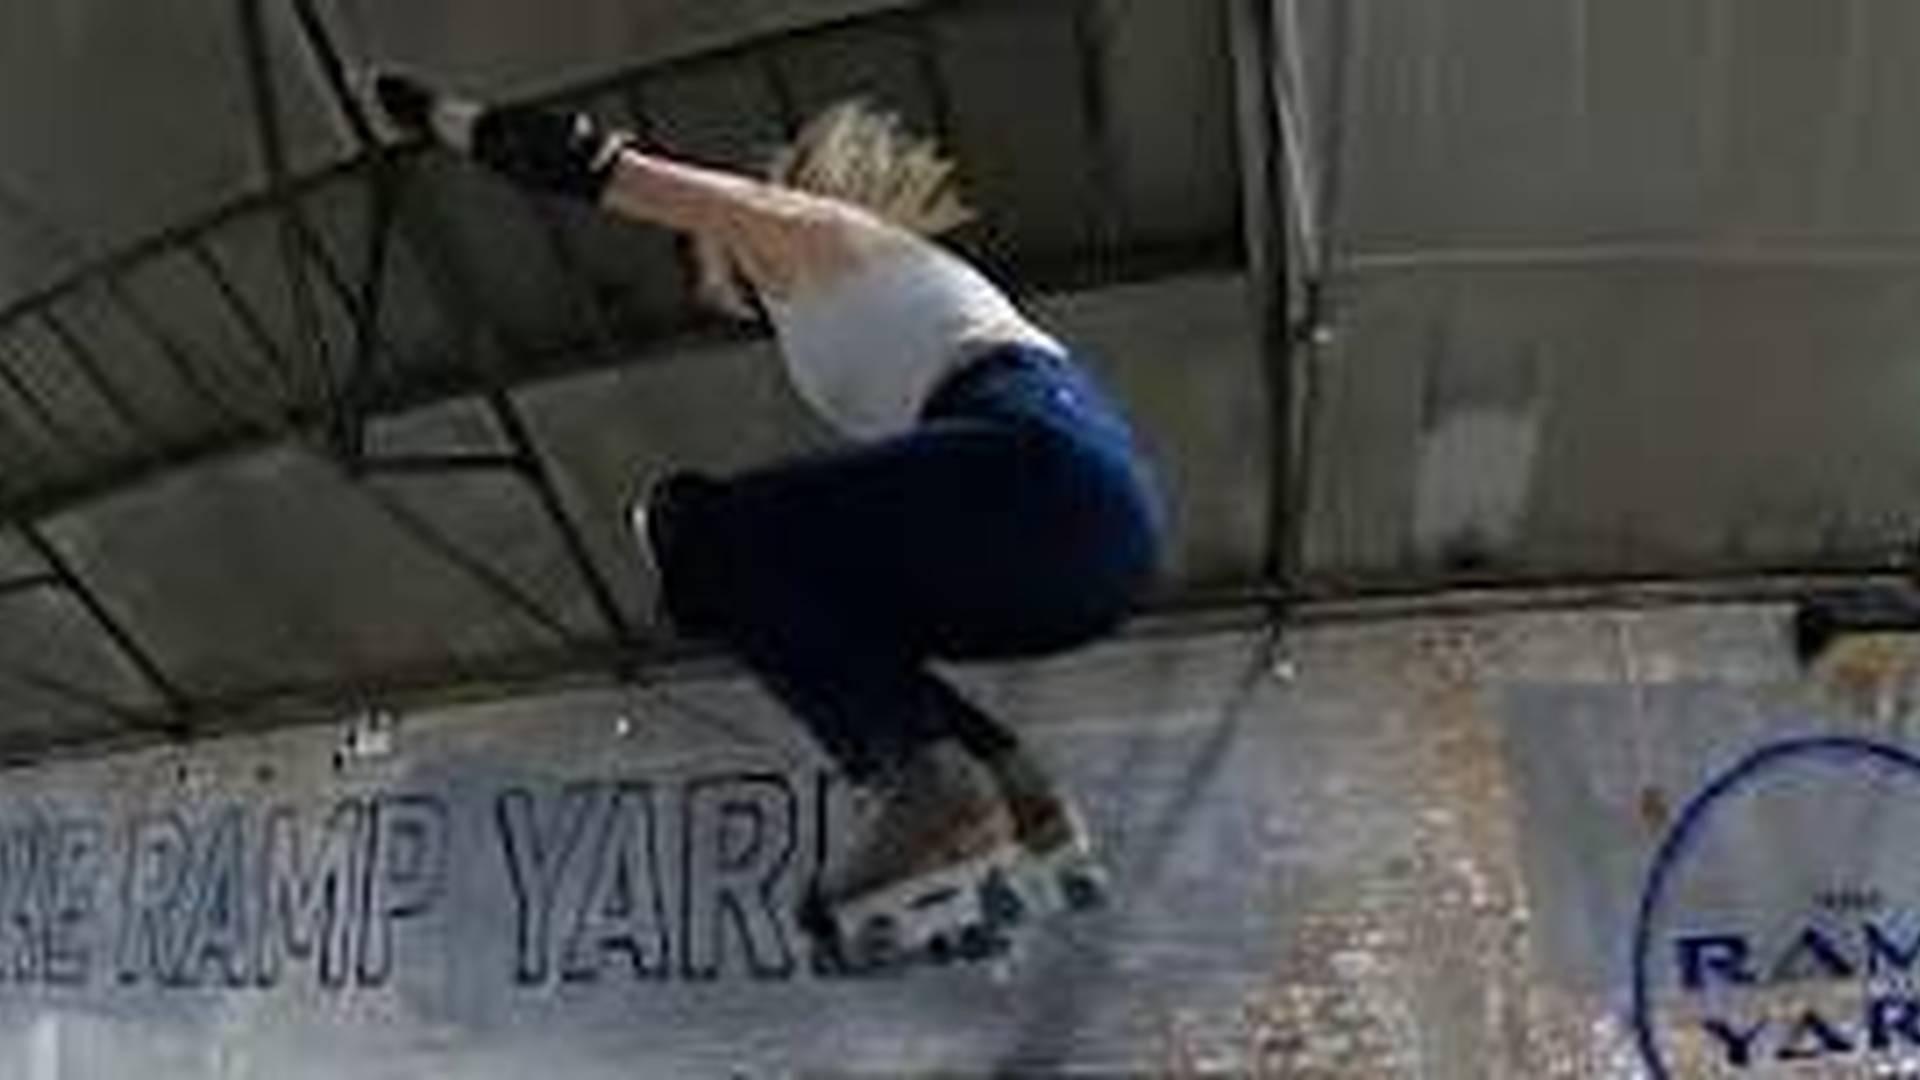 Ramp Yard Roller Skate Jam photo